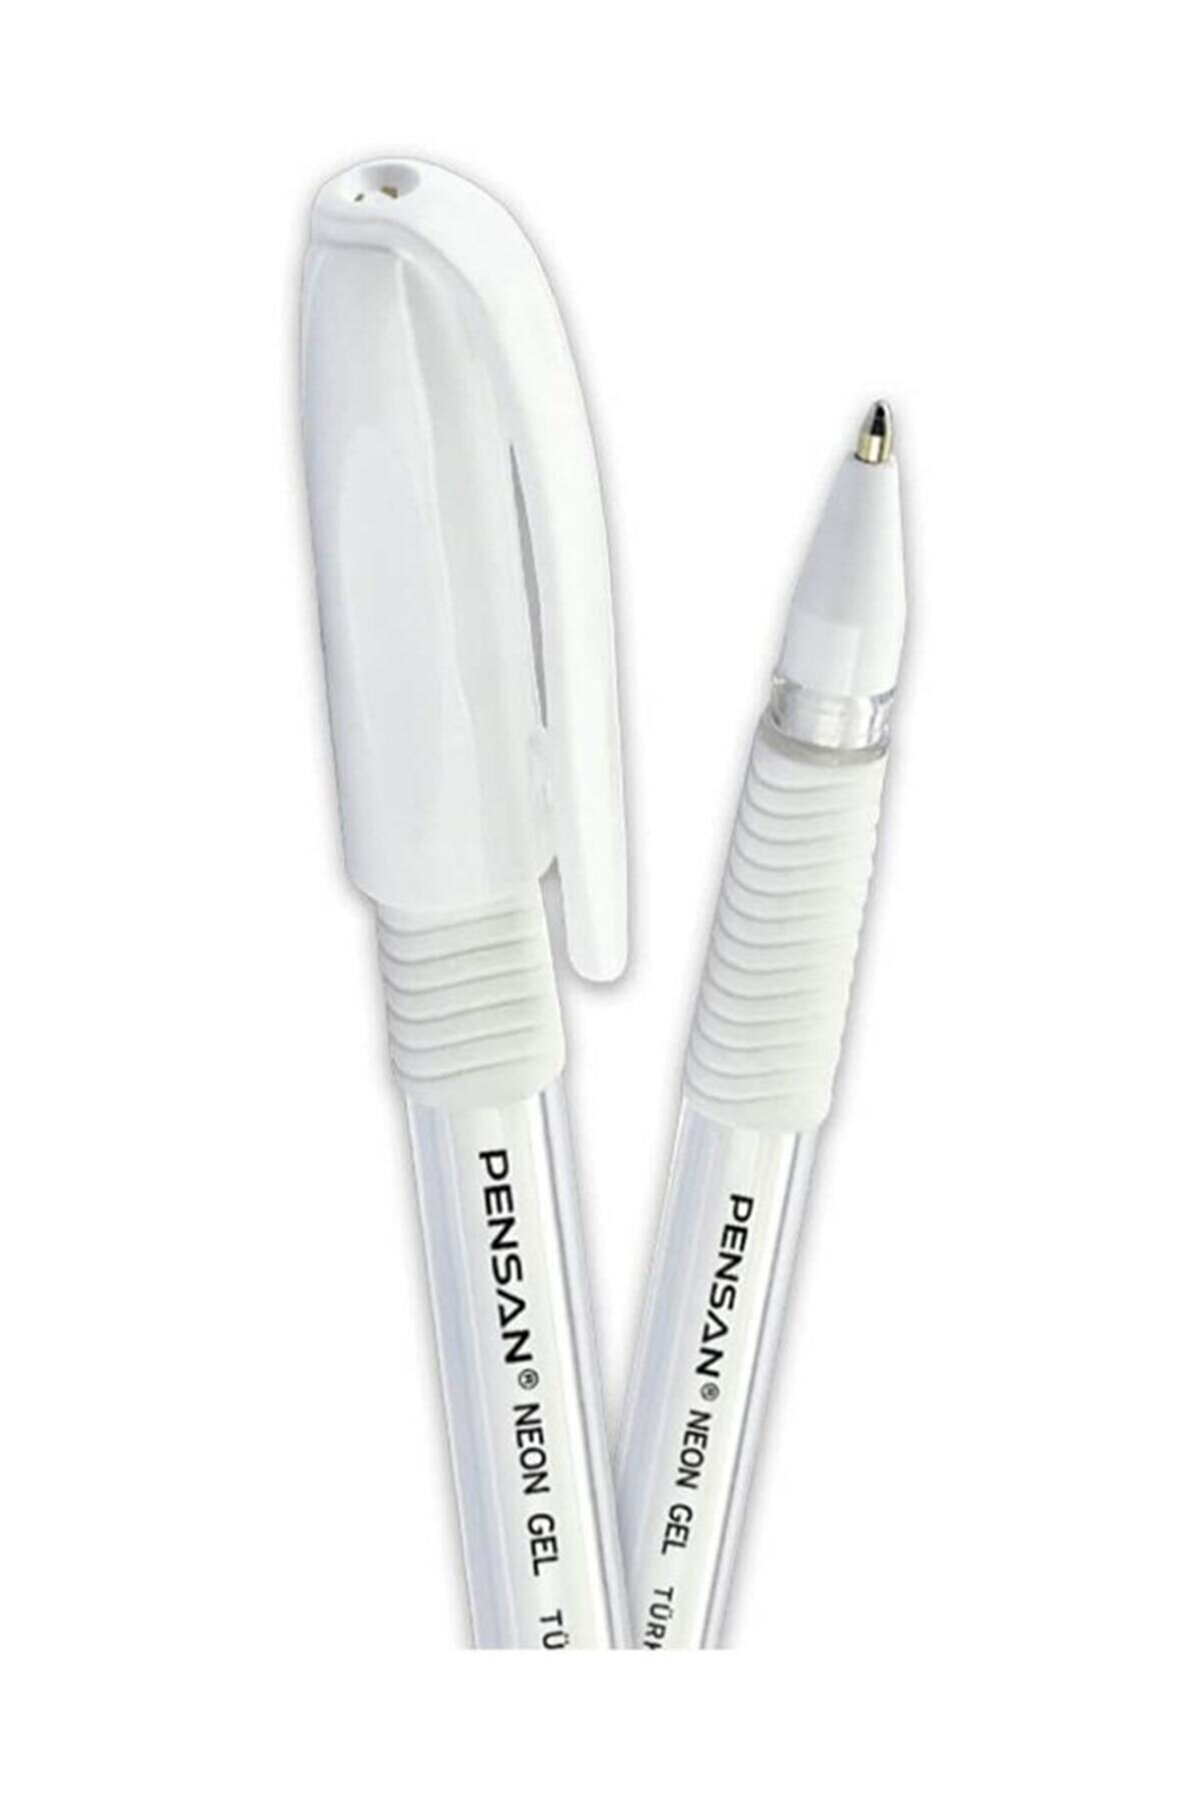 Pensan Tükenmez Kalem Jel 1.0 Mm Neon Beyaz Tekli (1 Adet)